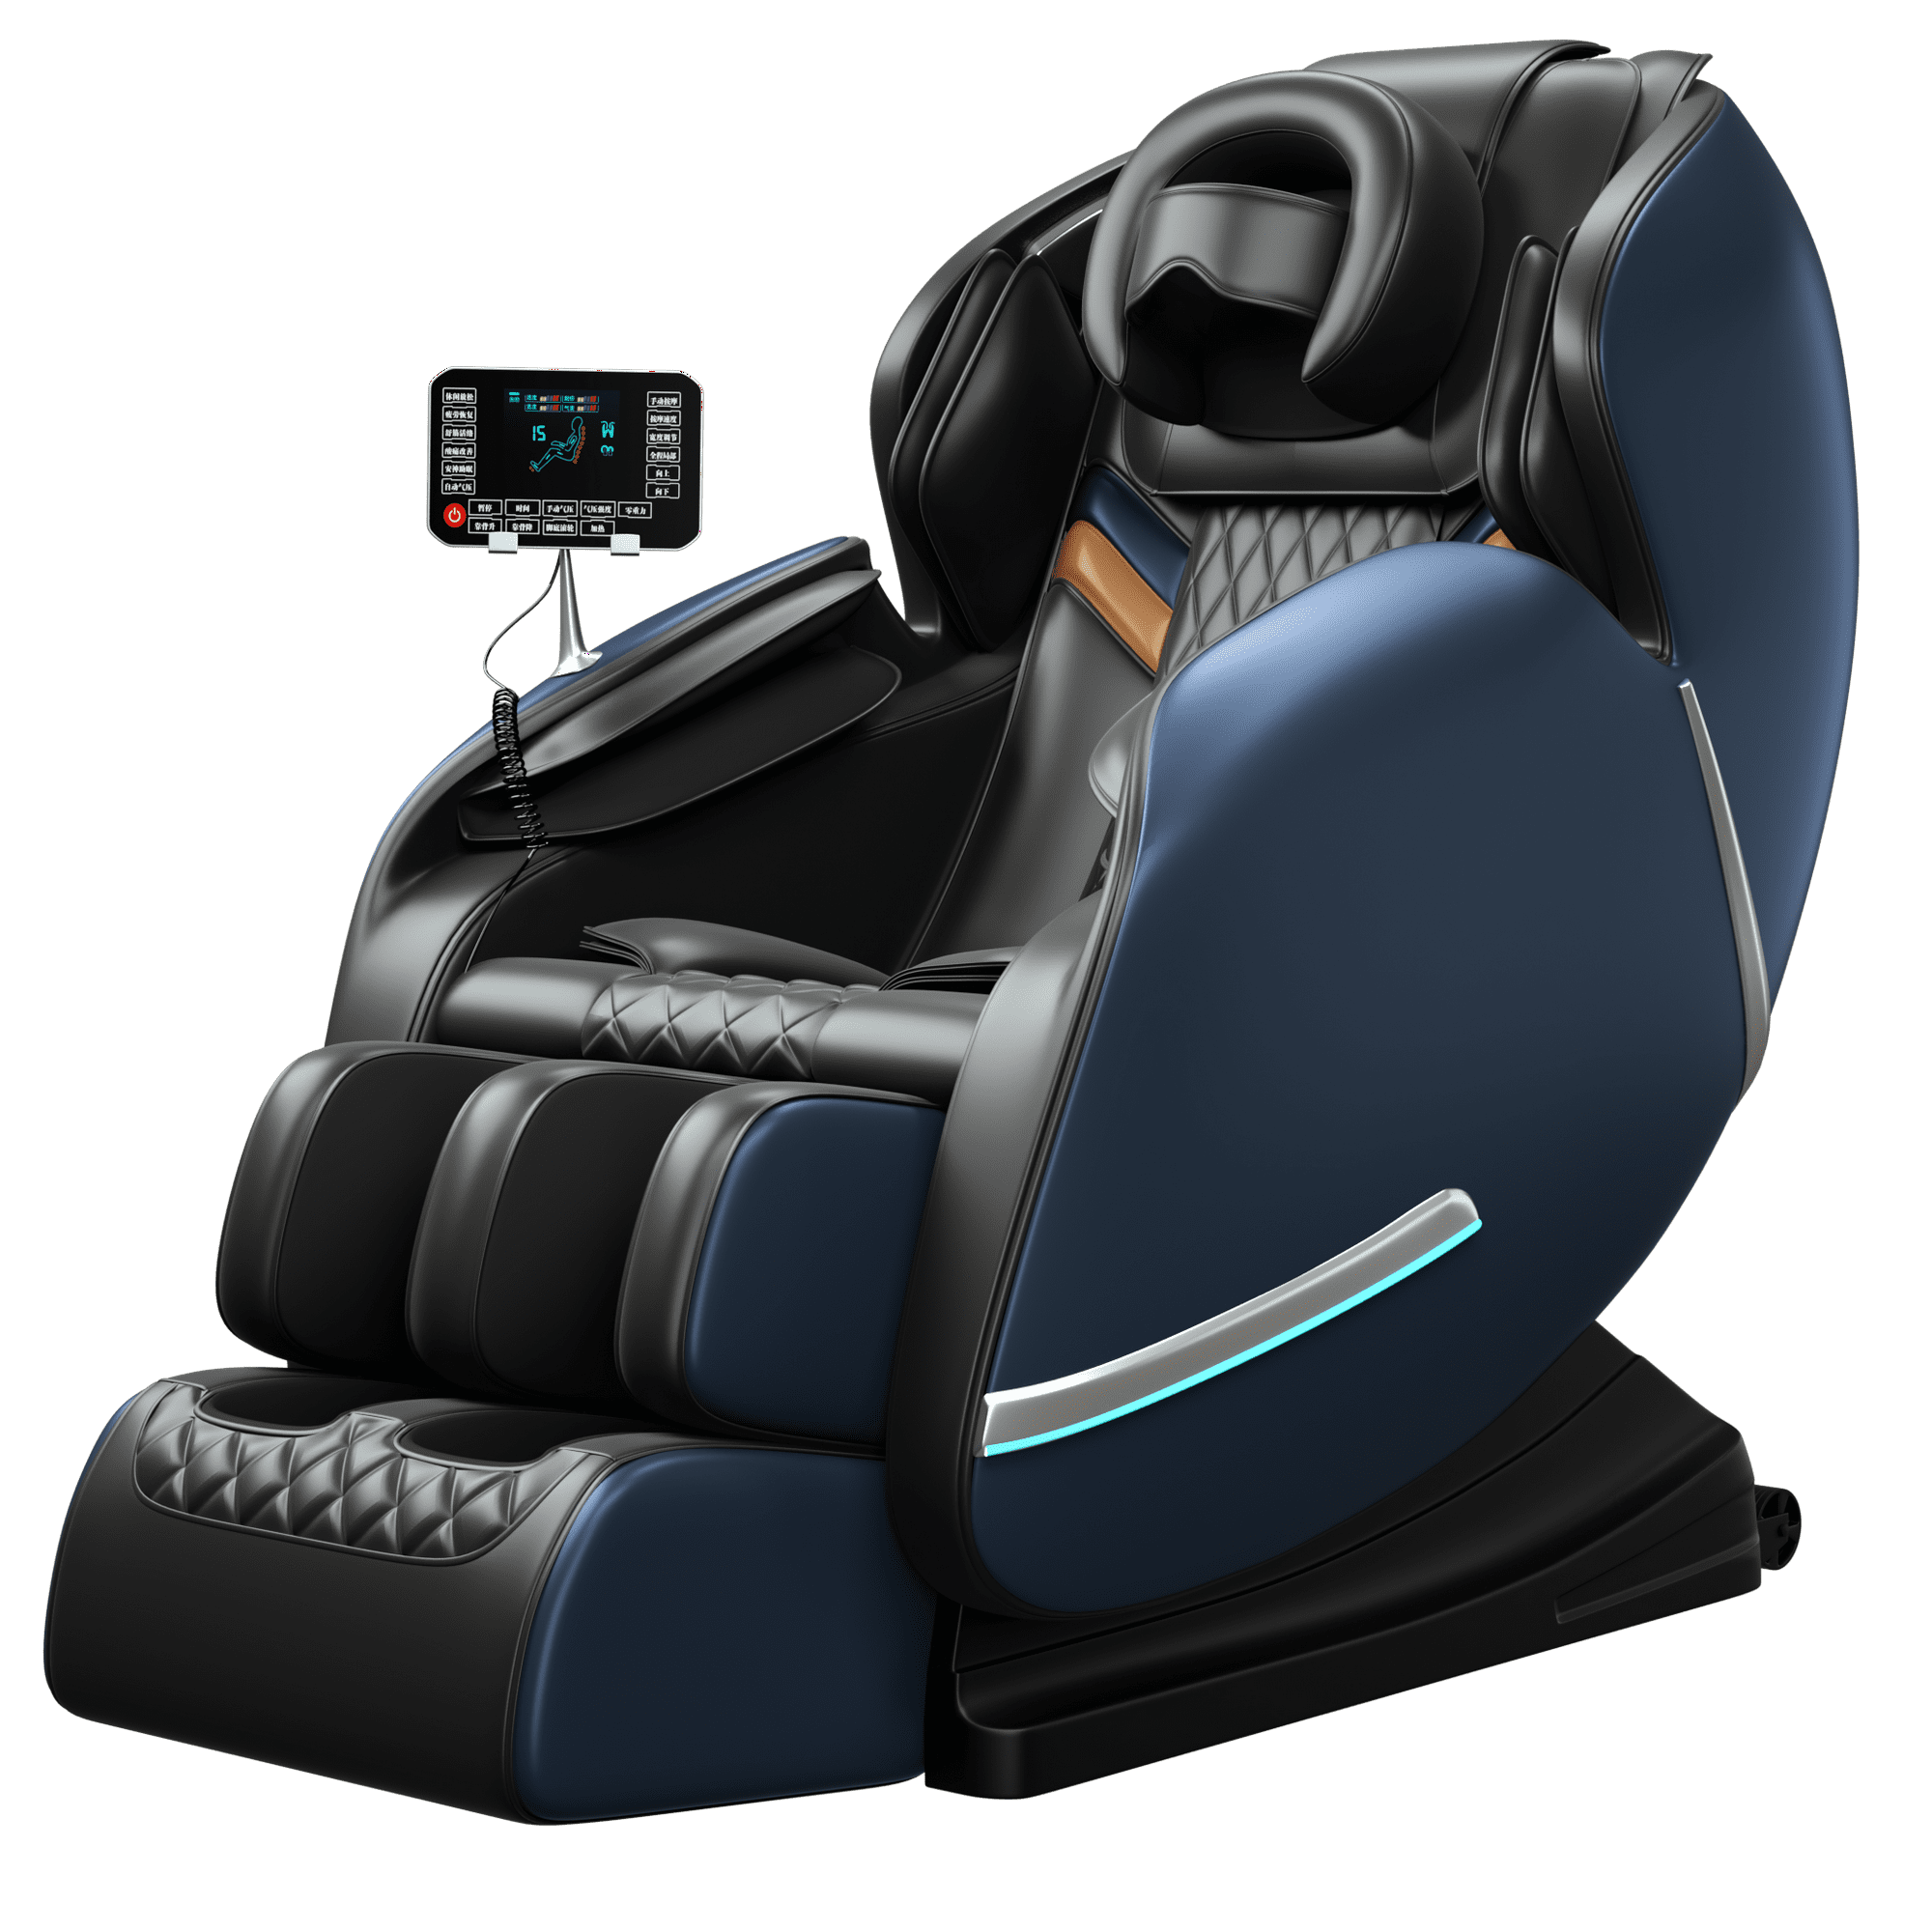 UPGO 4D Zero Gravity Shiatsu Full Body Massage Chair with Stretching Function, Bluetooth, Heating Function